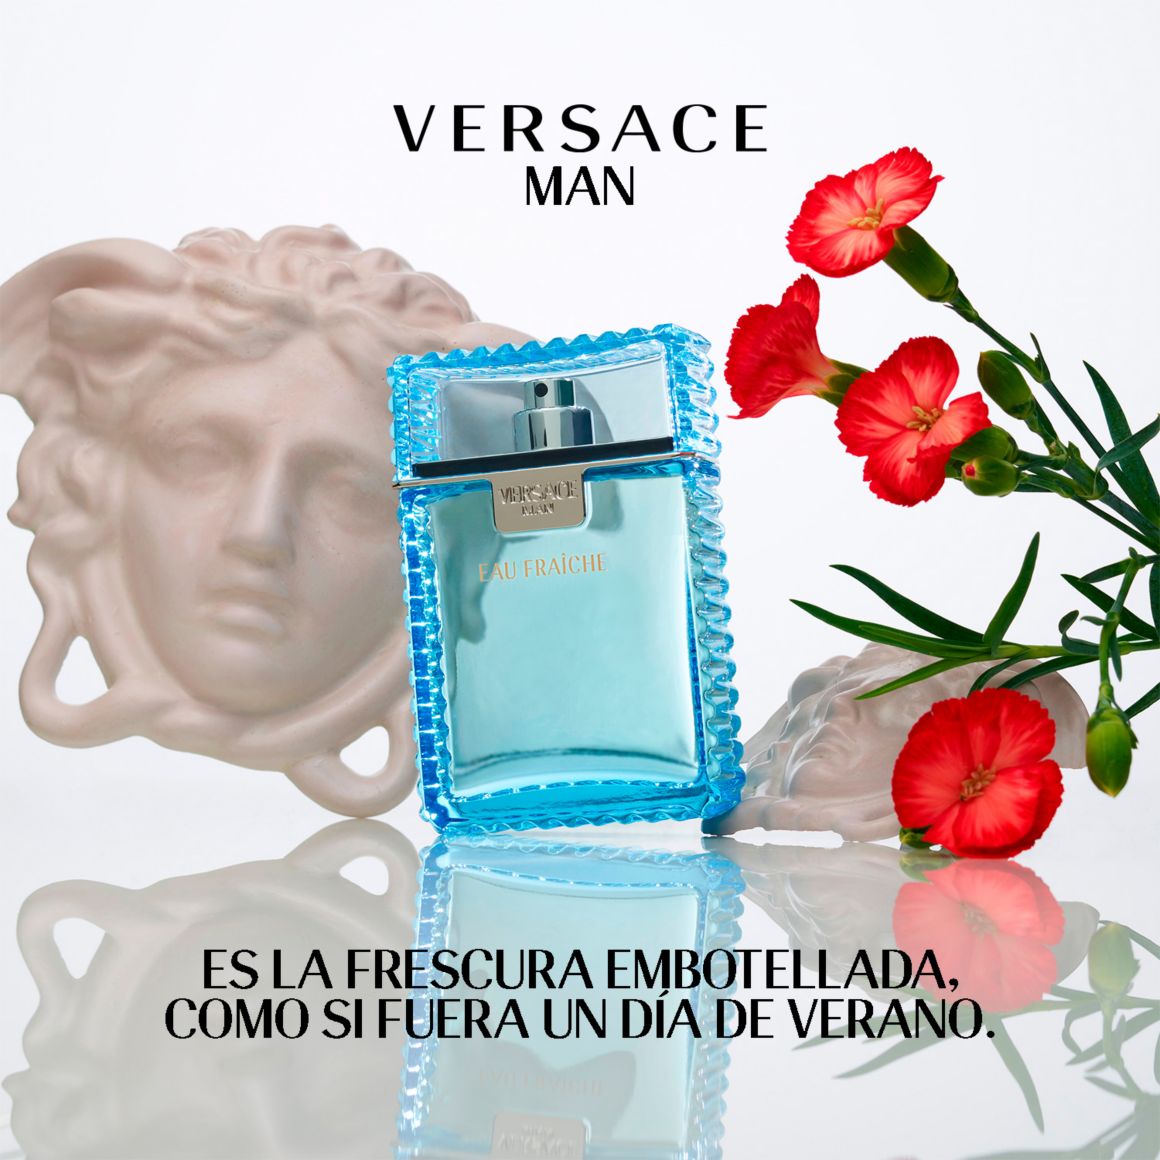 Perfume, Fragancia, Aroma, Versace, VERSACE, Fragancia Versace, Eau Friche, Azul, Fragancia azul, Frase